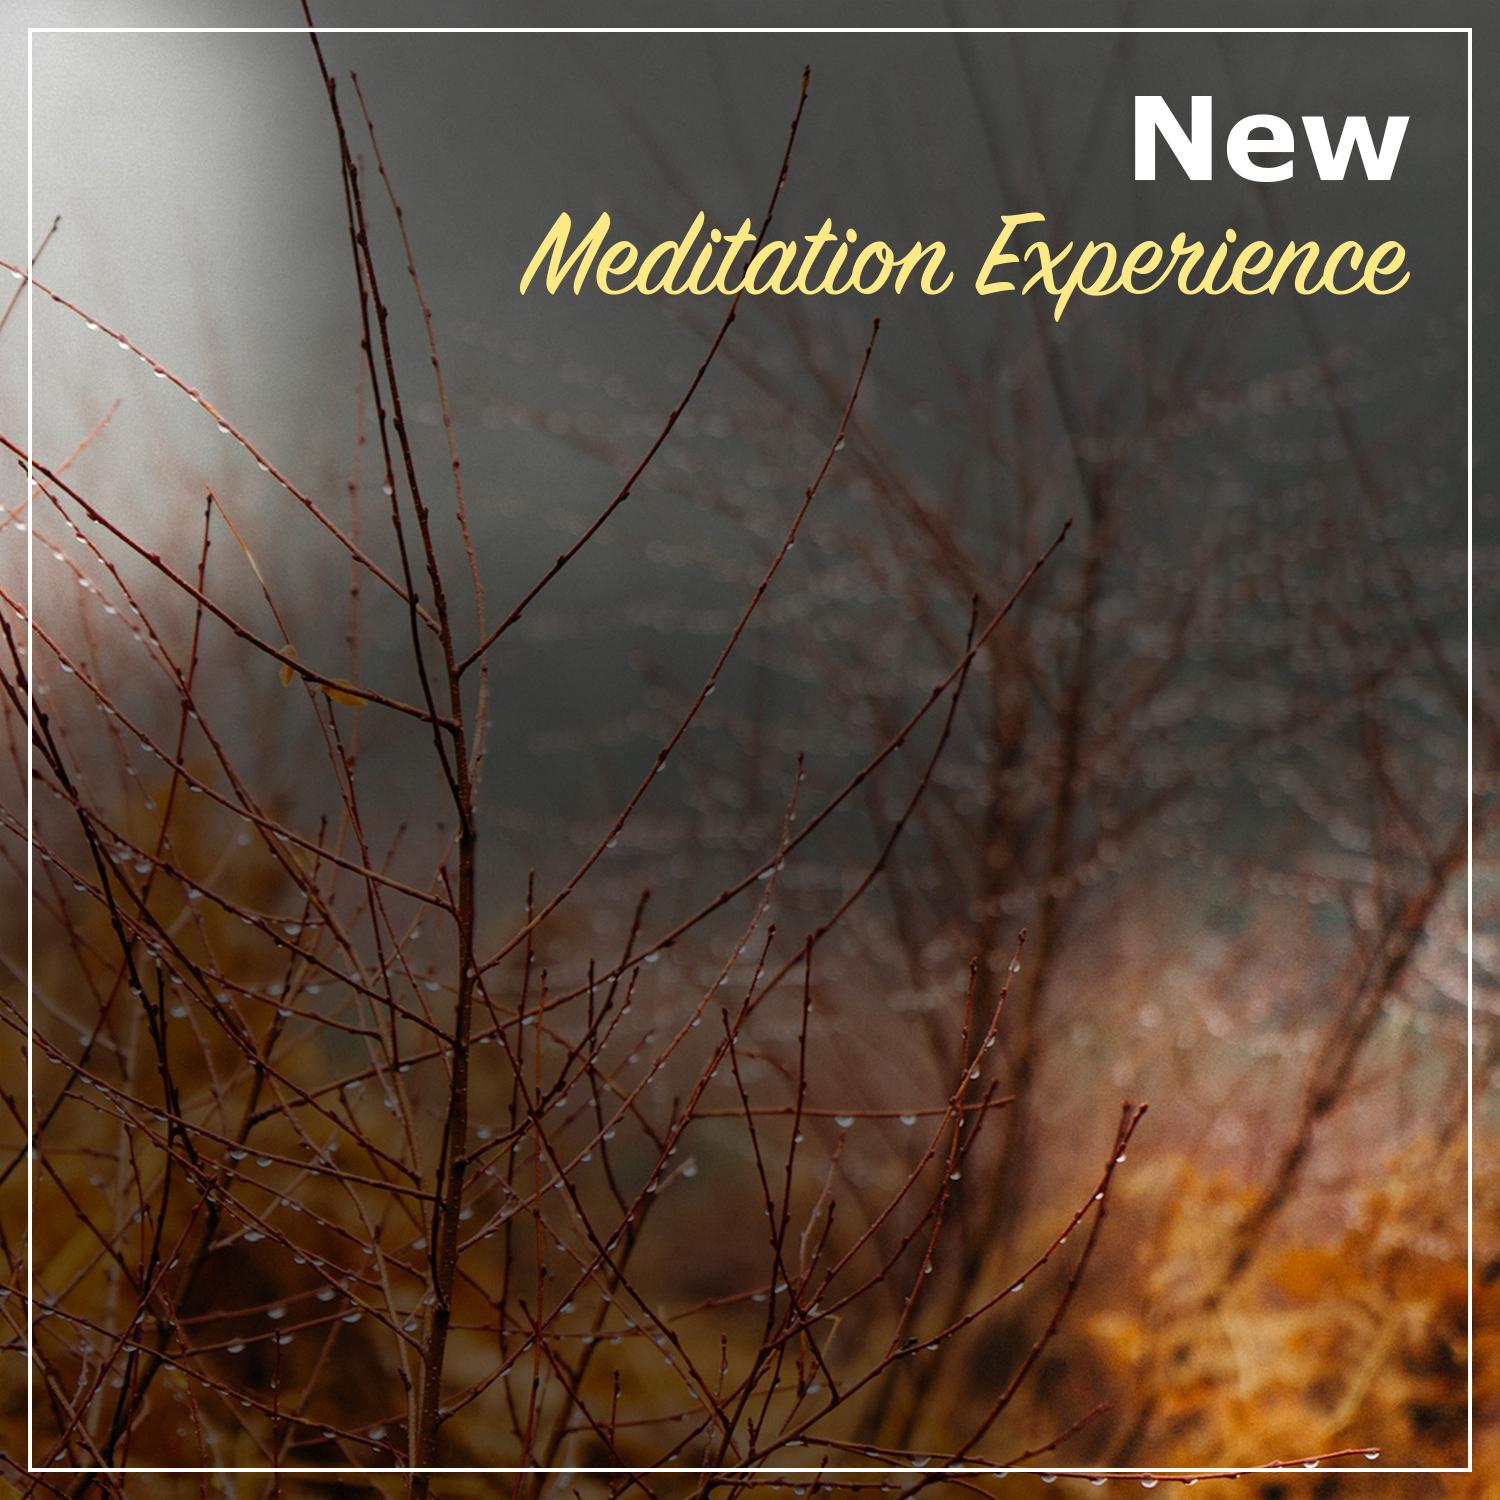 2018 A New Meditation Experience - Natural Rain